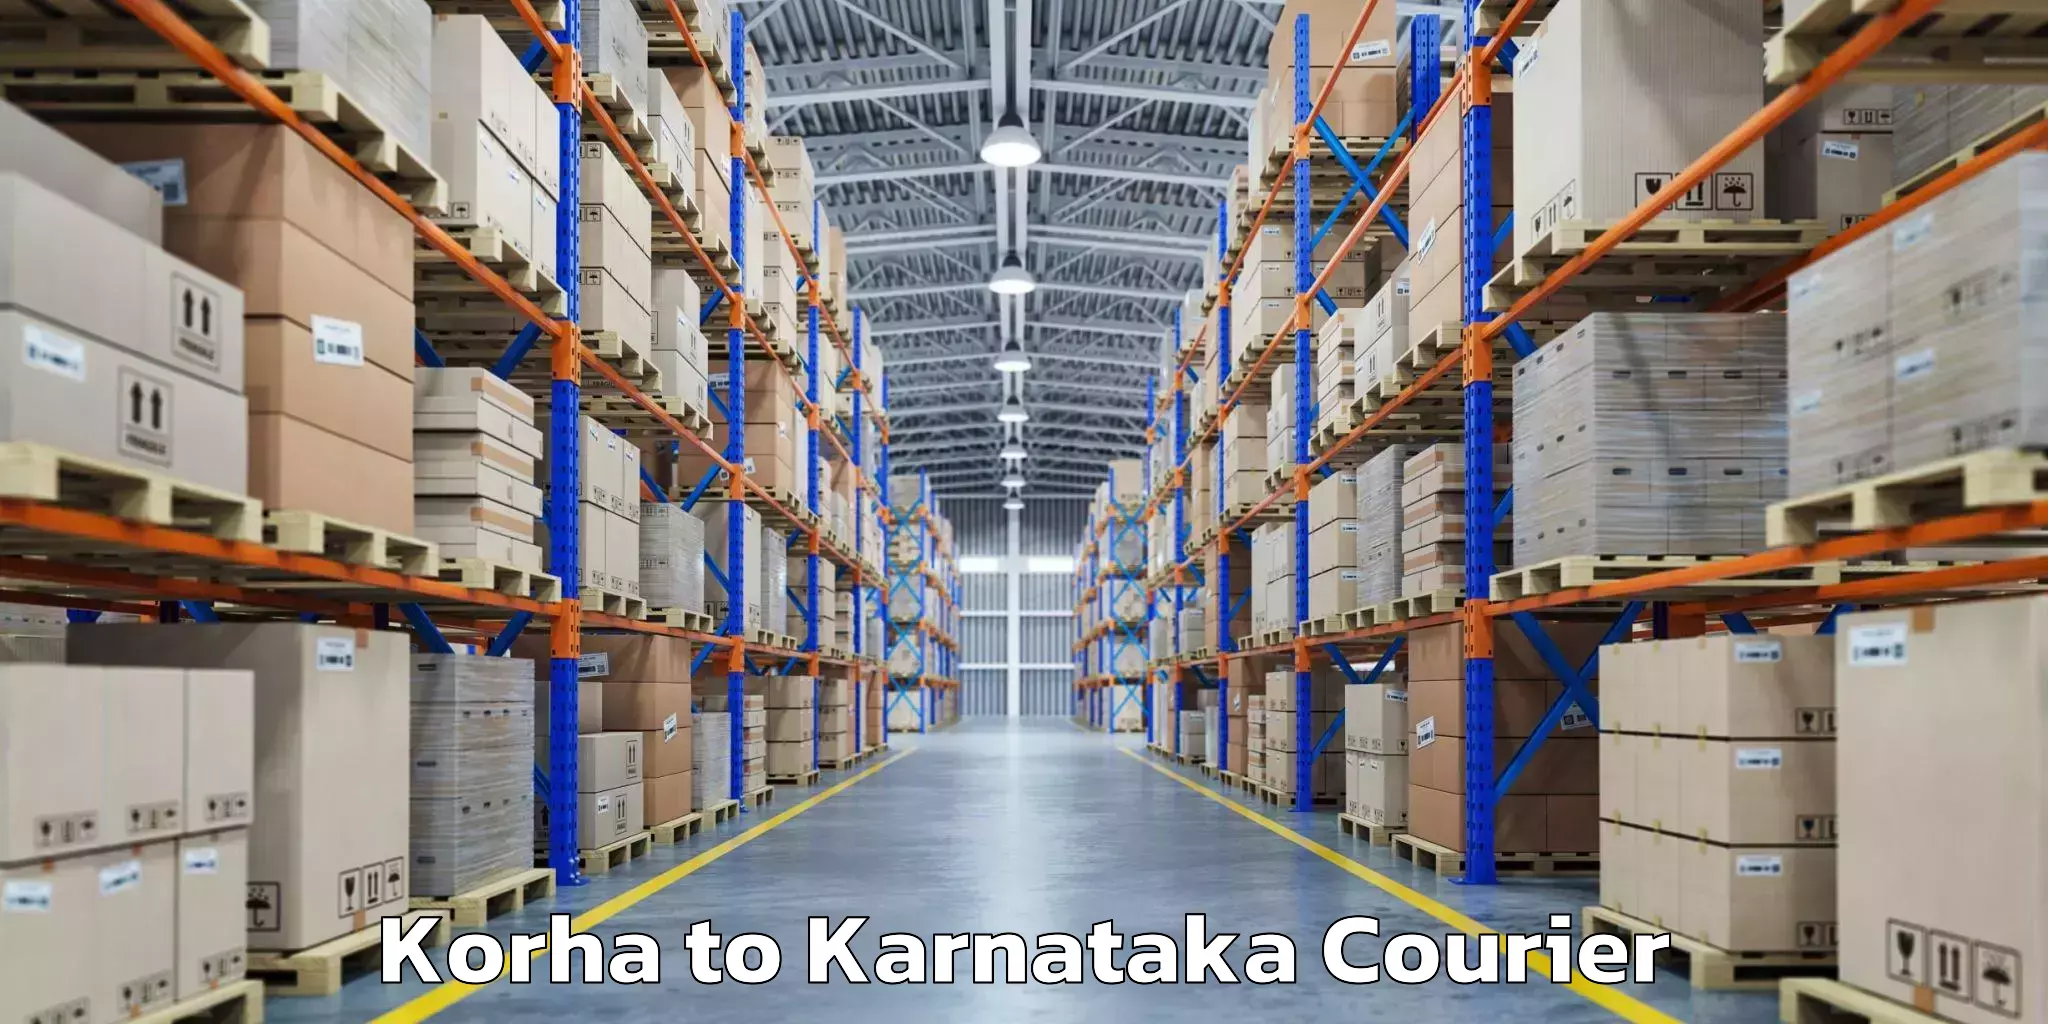 Luggage transport company Korha to Karnataka